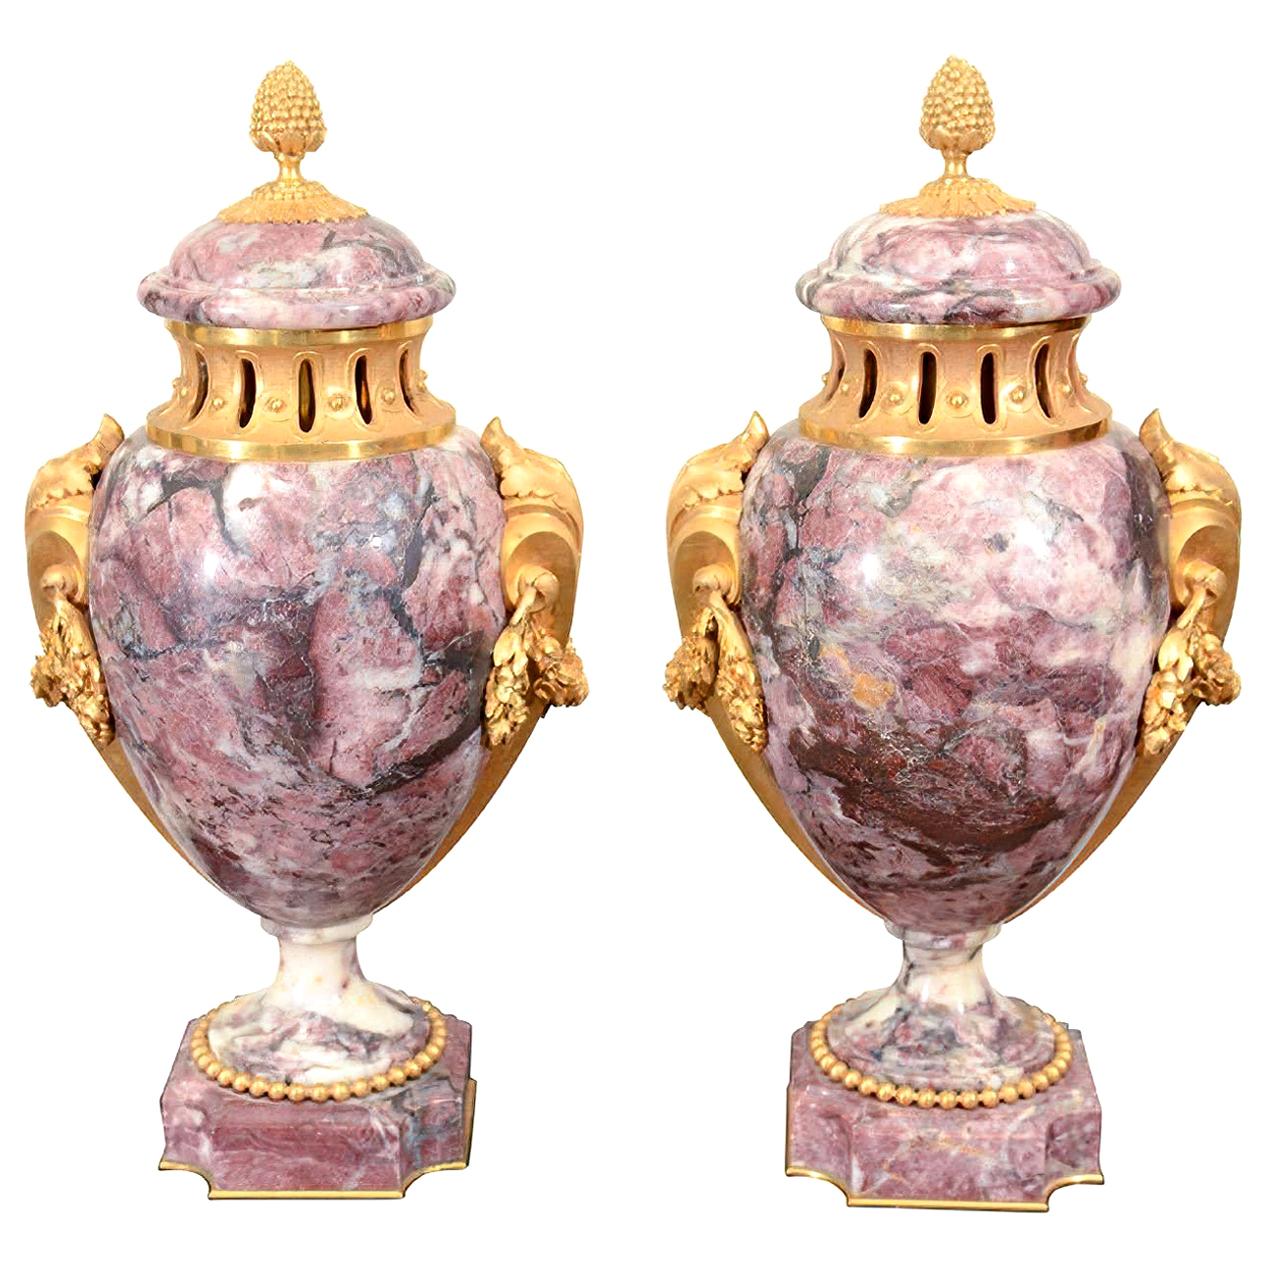 Pair of Louis XVI Style Urns